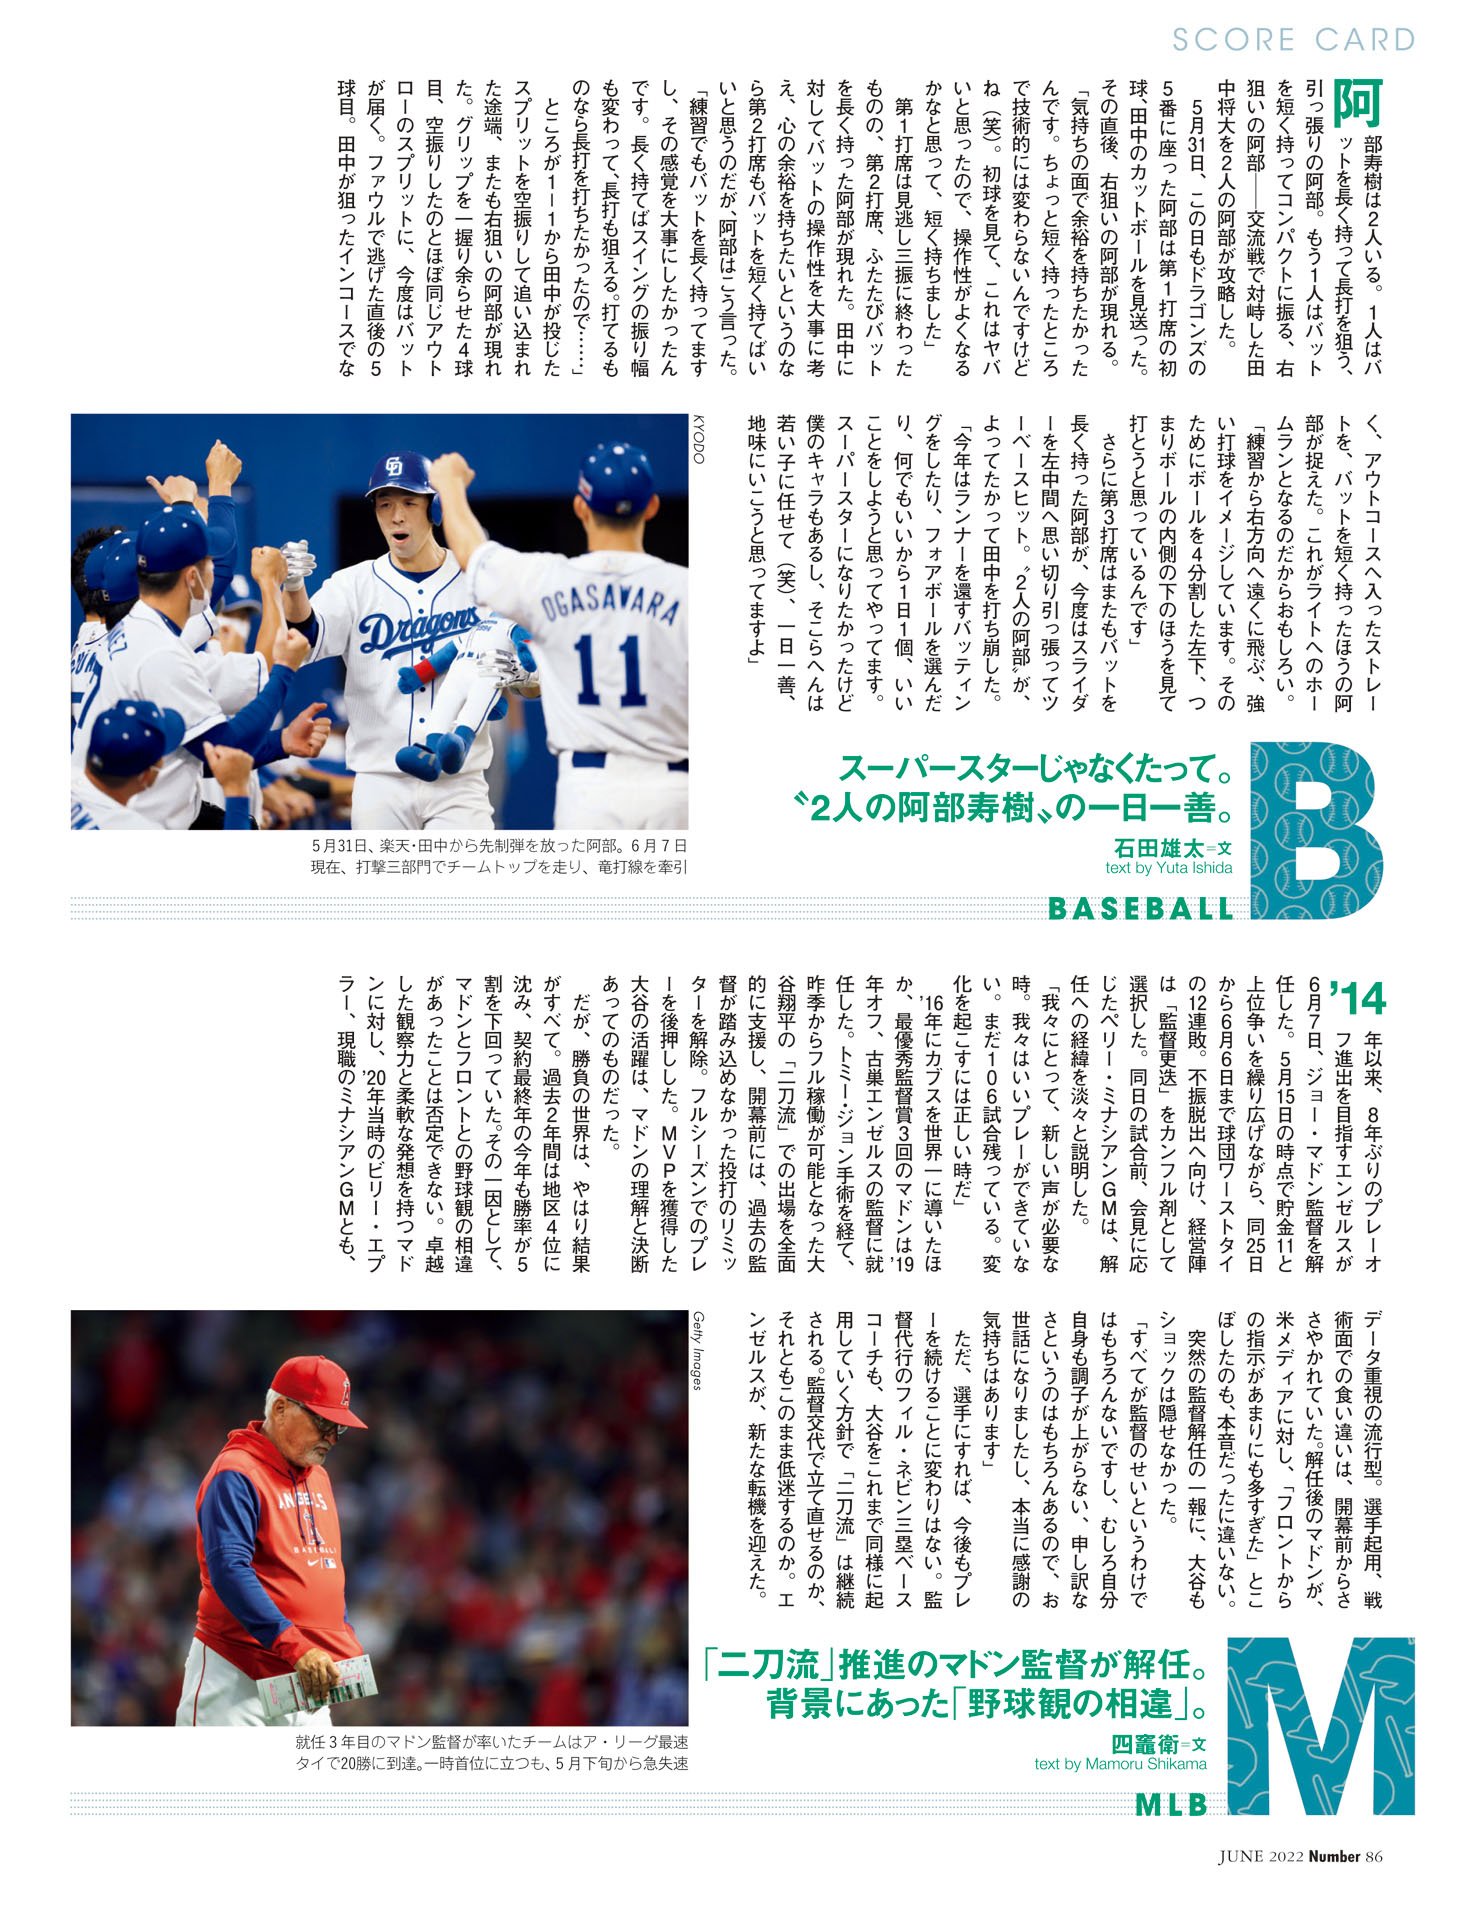 【SCORE CARD】BASEBALL／MLB